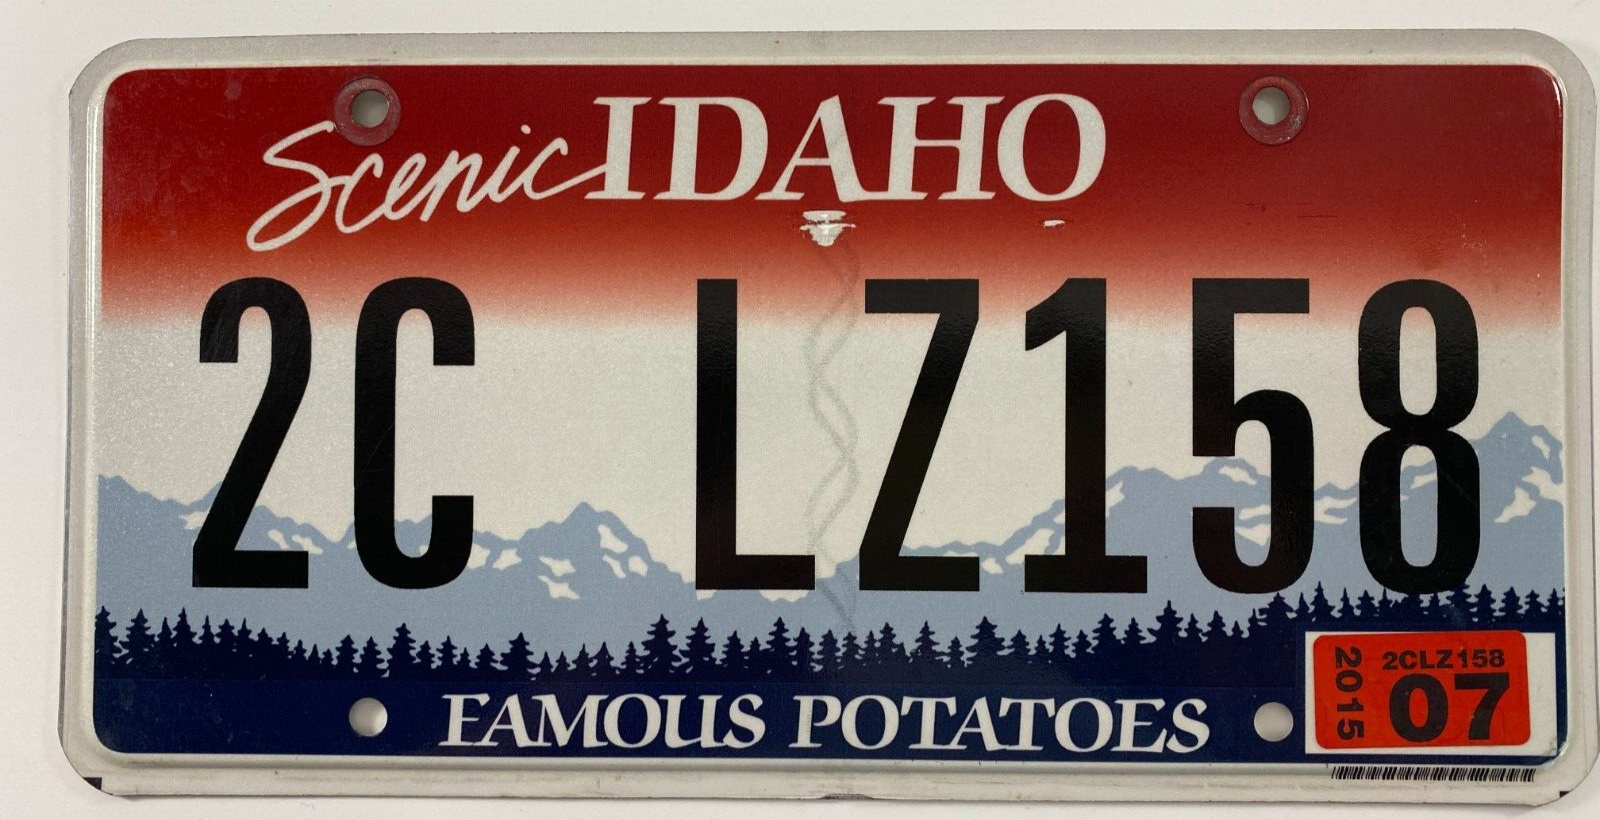 2015 Scenic Idaho Famous Potatoes License Plate 2CLZ158 w/Sticker